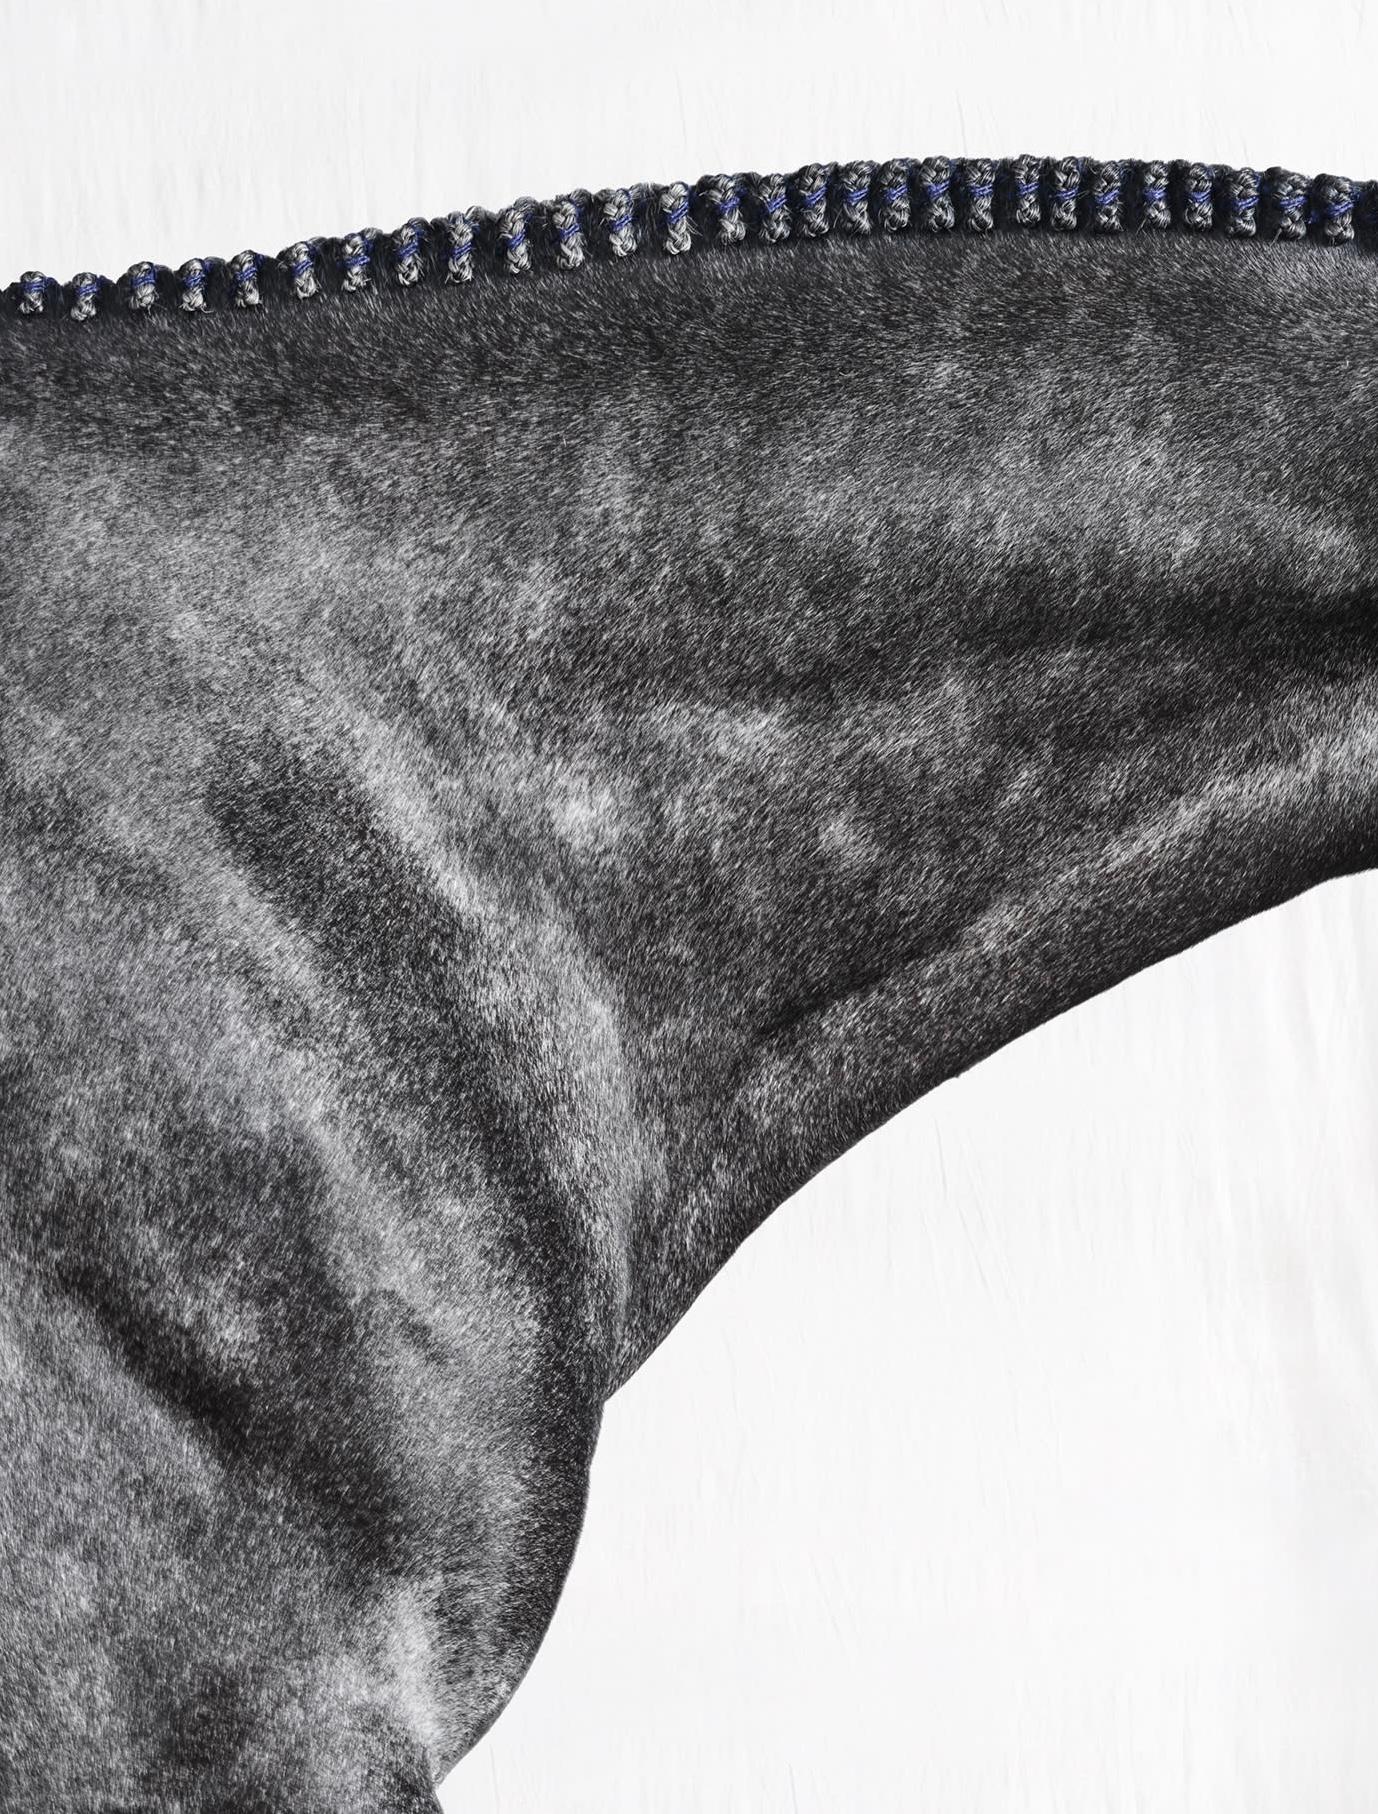 Optimist I - Black and White Limited Edition Horse Portrait 2015 - Photograph by Juan Lamarca